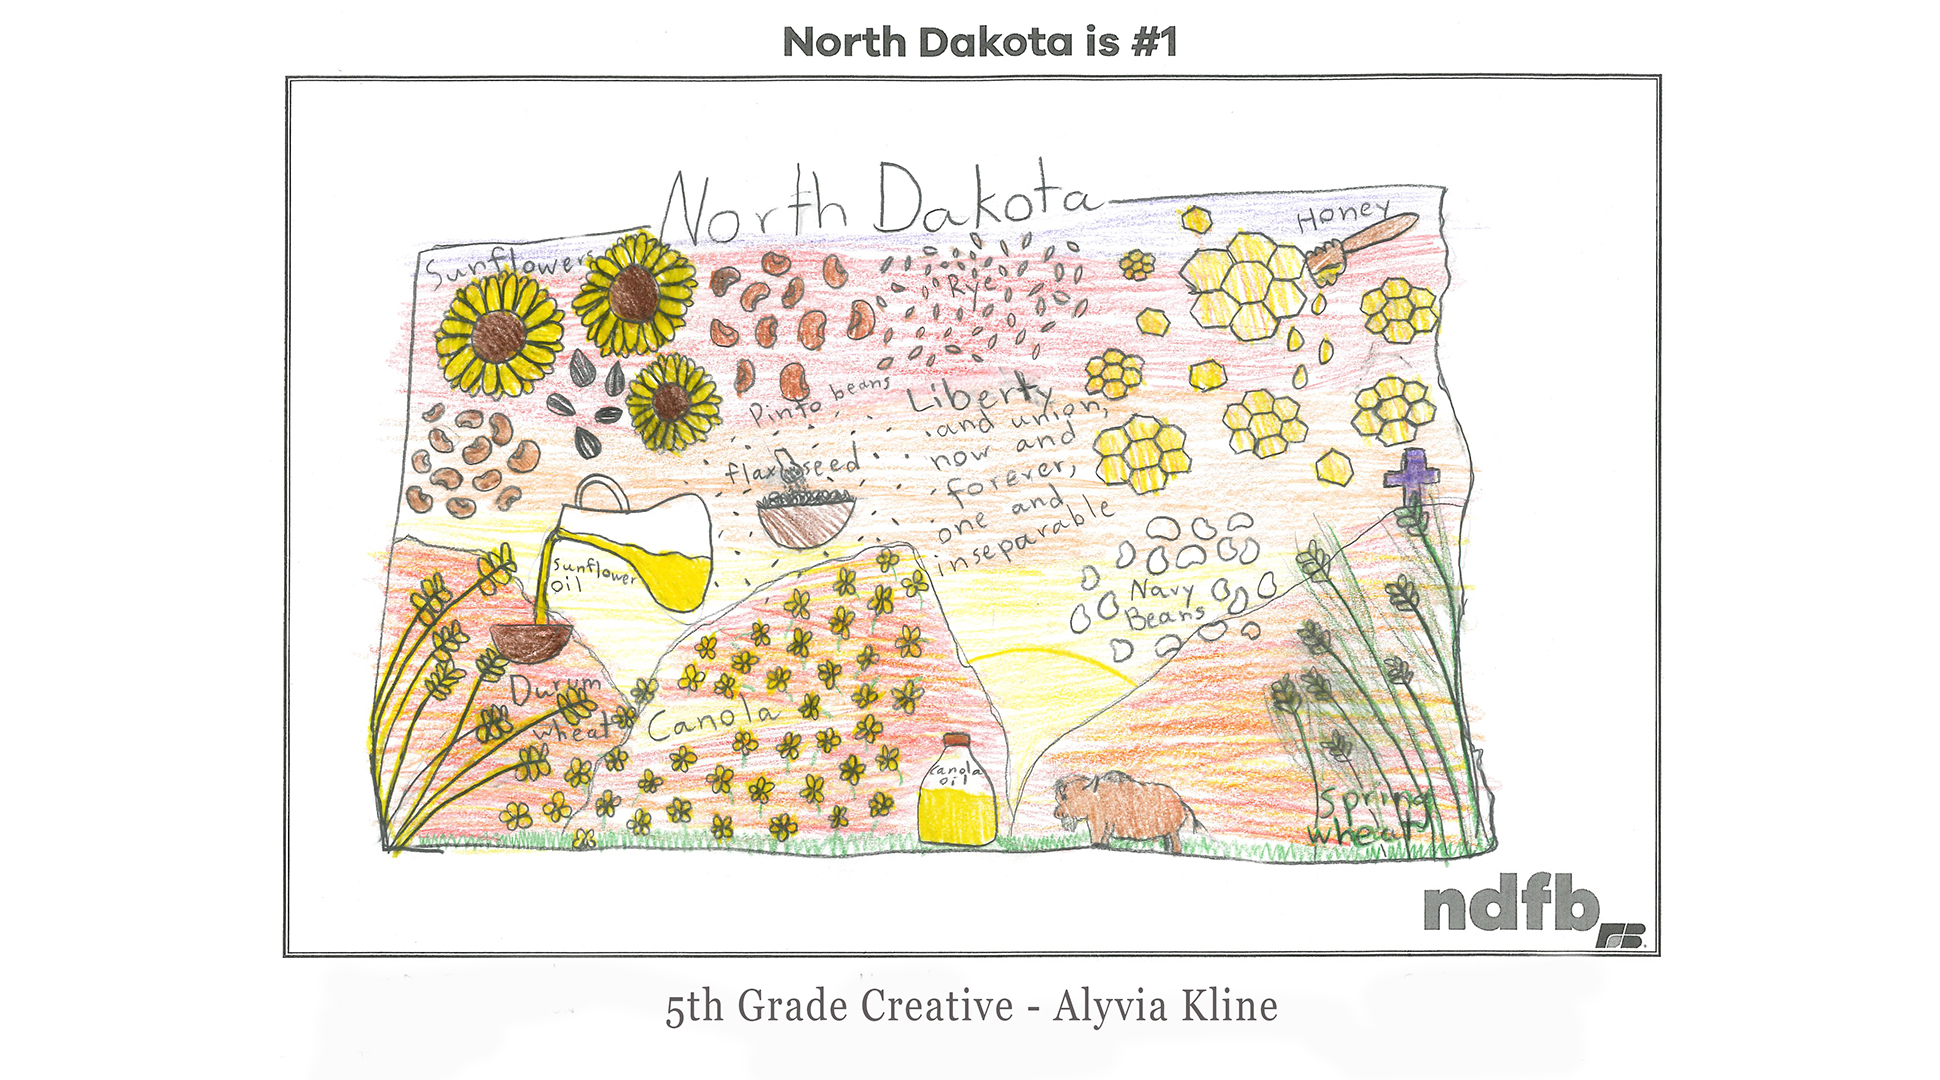 National North Dakota Day